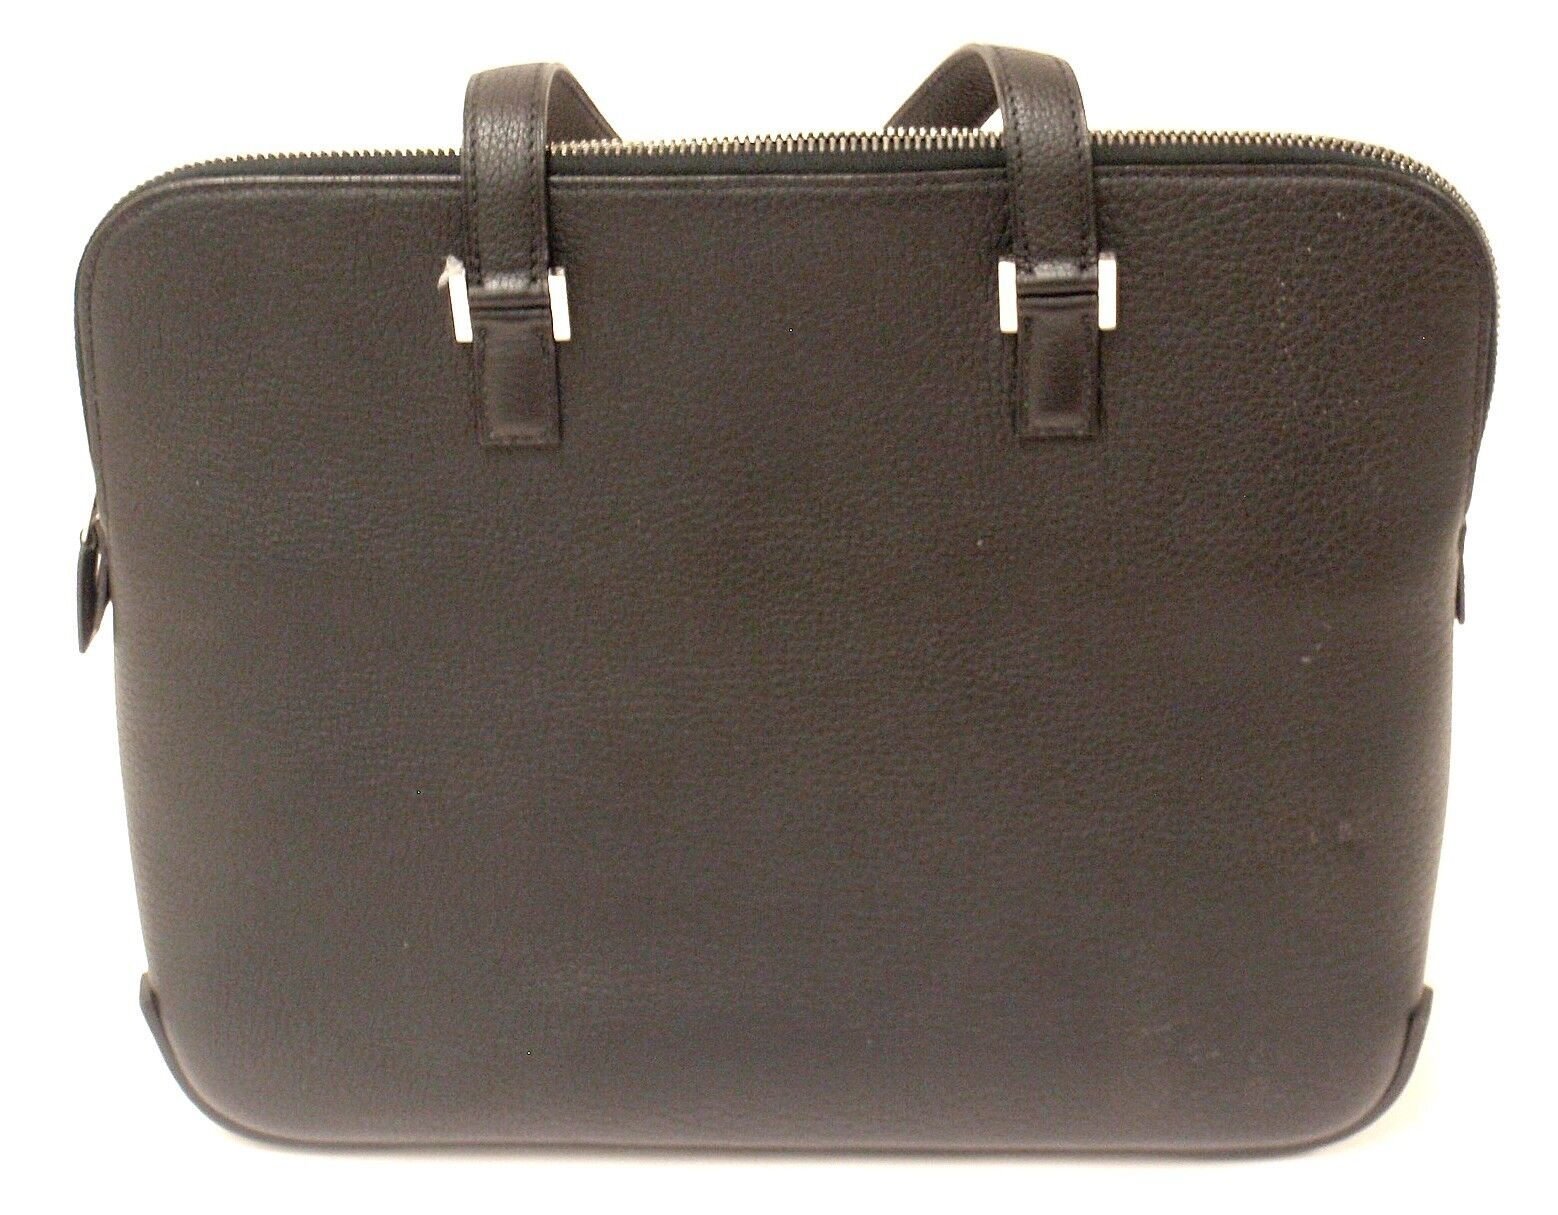 Excellent Condition Hermes Black Chevre Leather Escapade Handbag